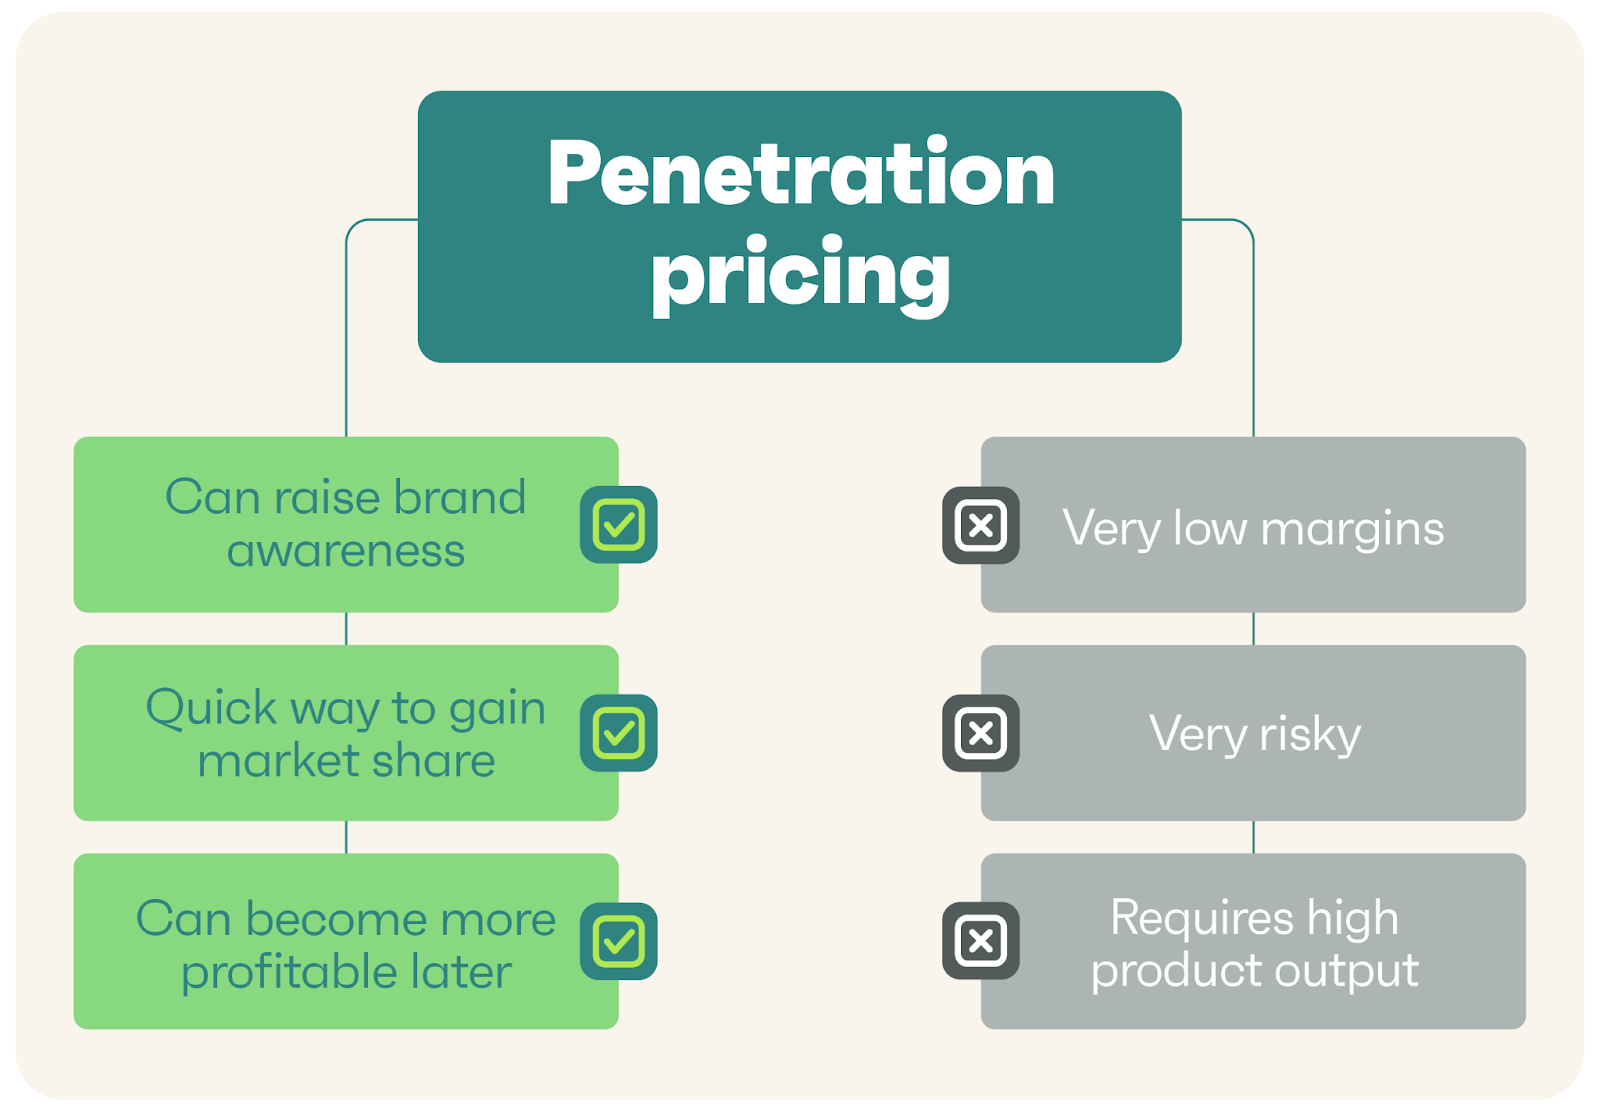 Penetration pricing advantages and disadvantages